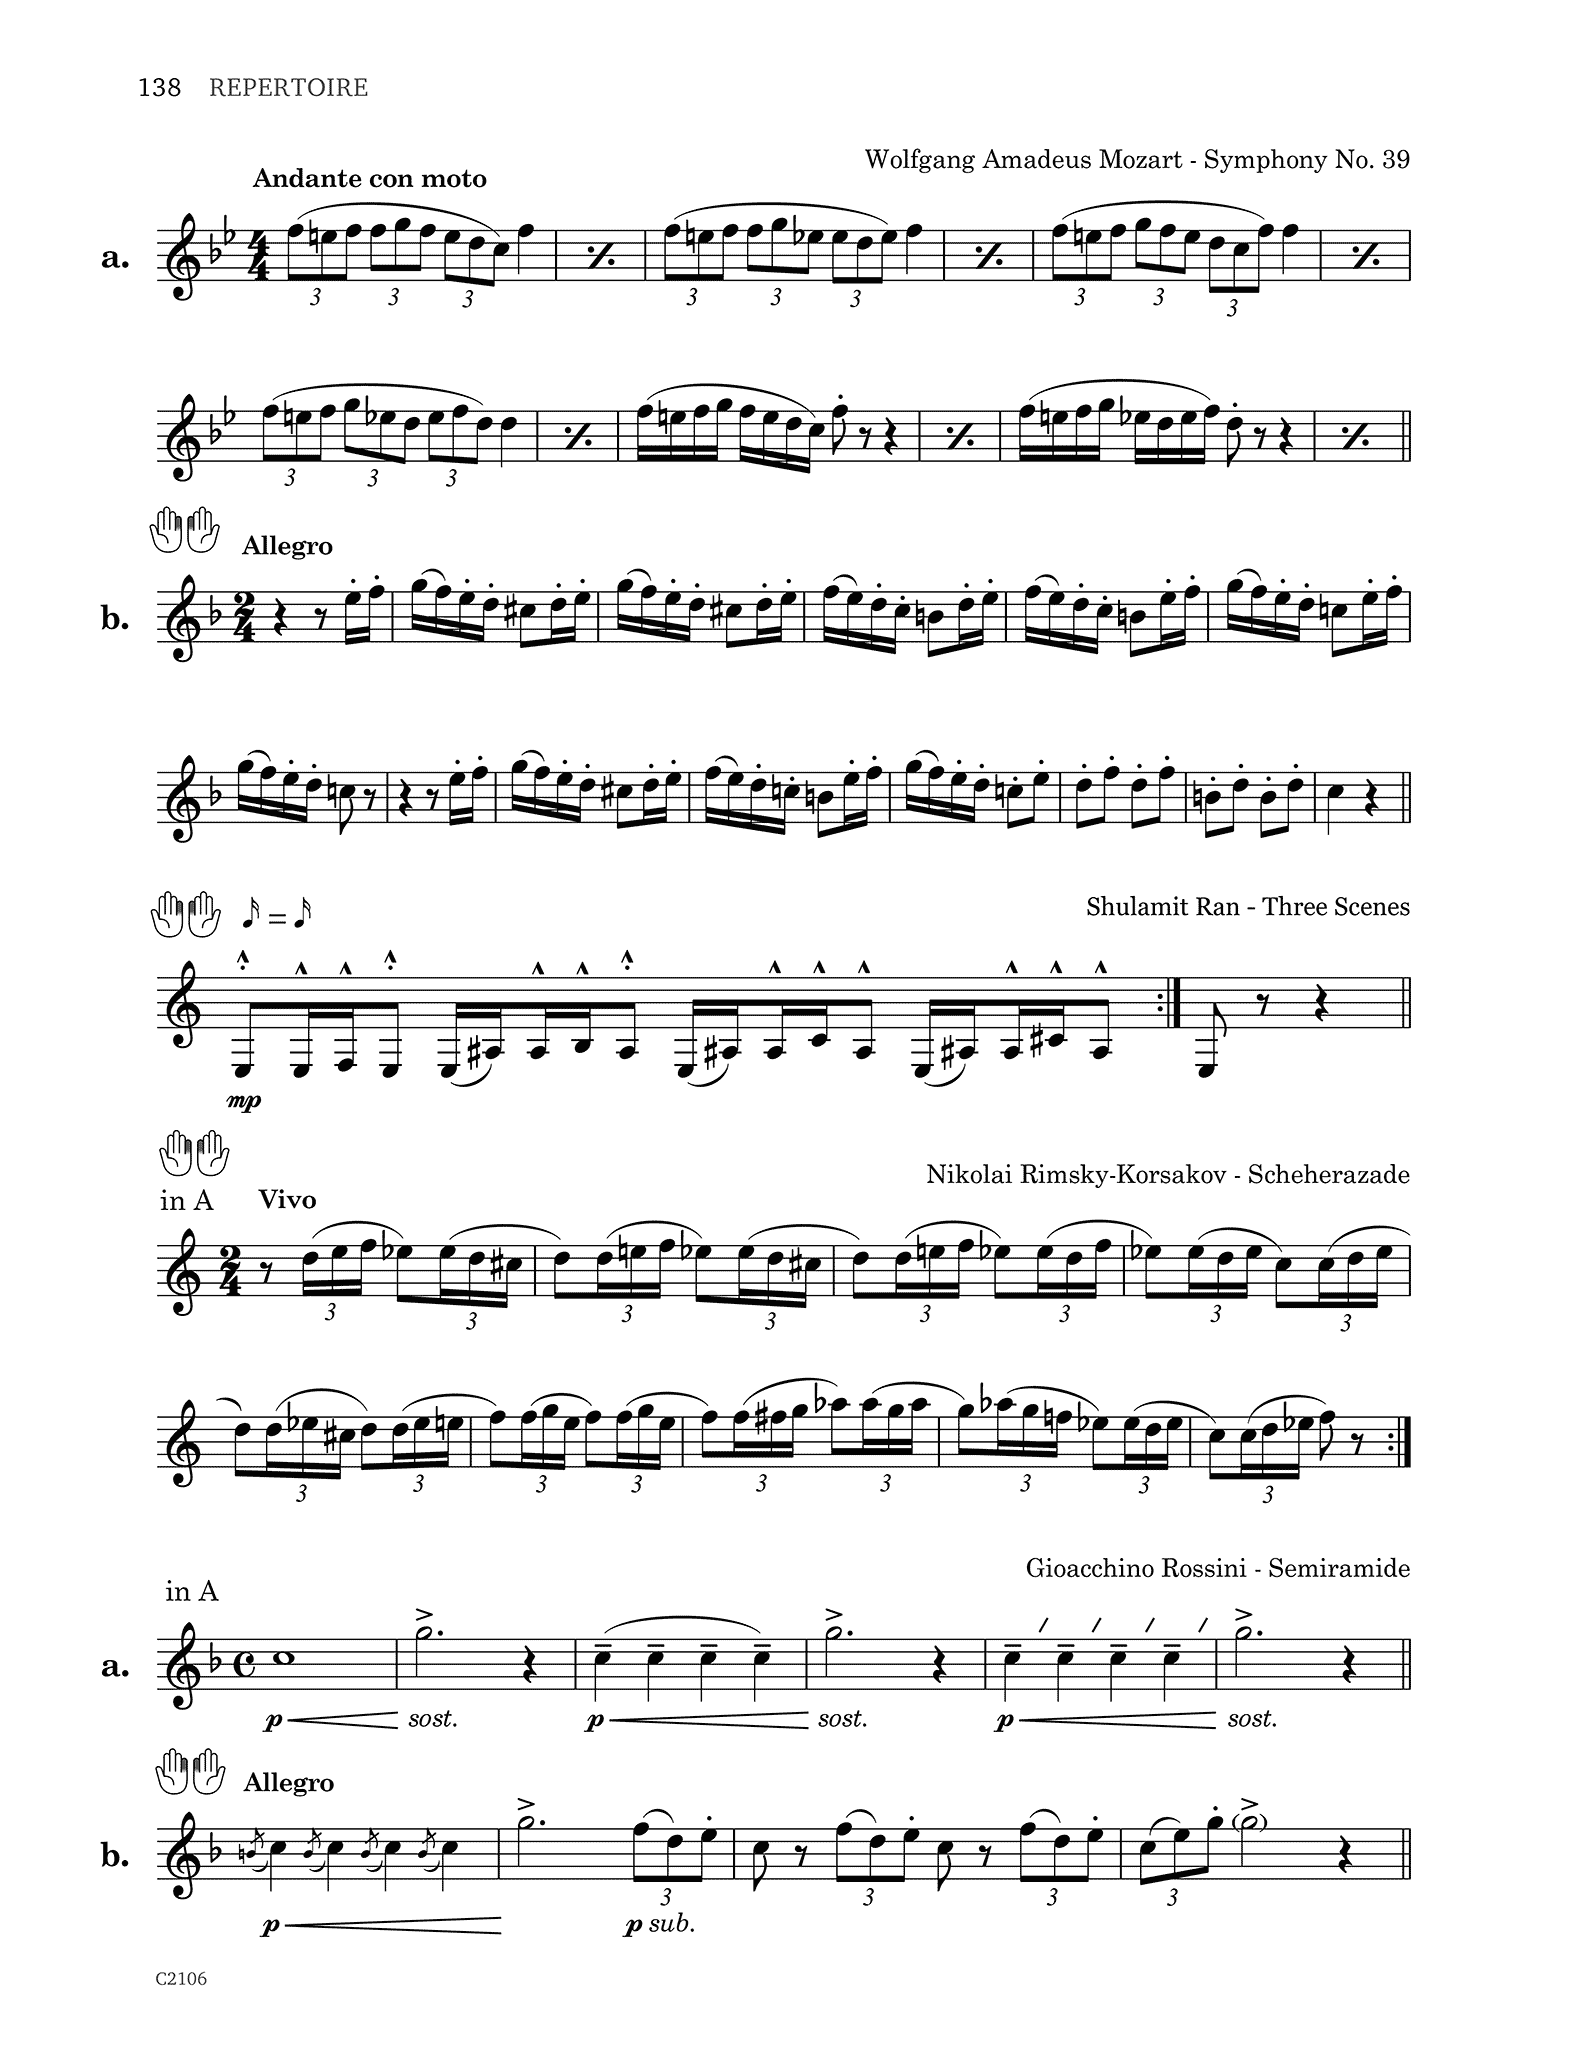 Druhan One Handed Clarinetist’s Workbook page 138 repertoire